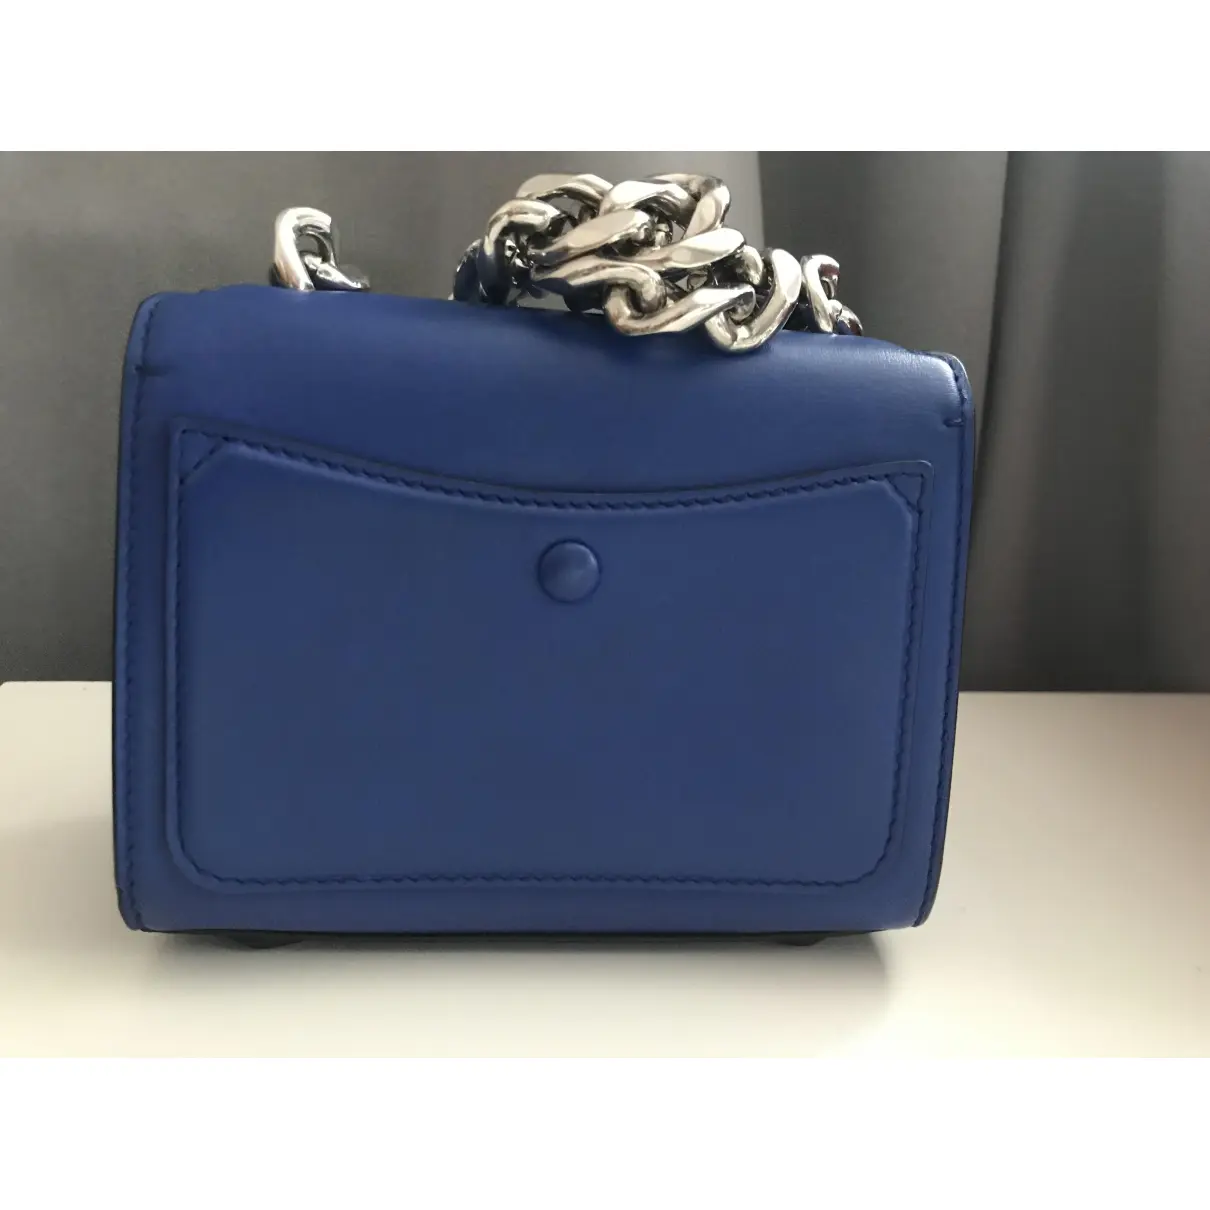 Buy Emilio Pucci Leather handbag online